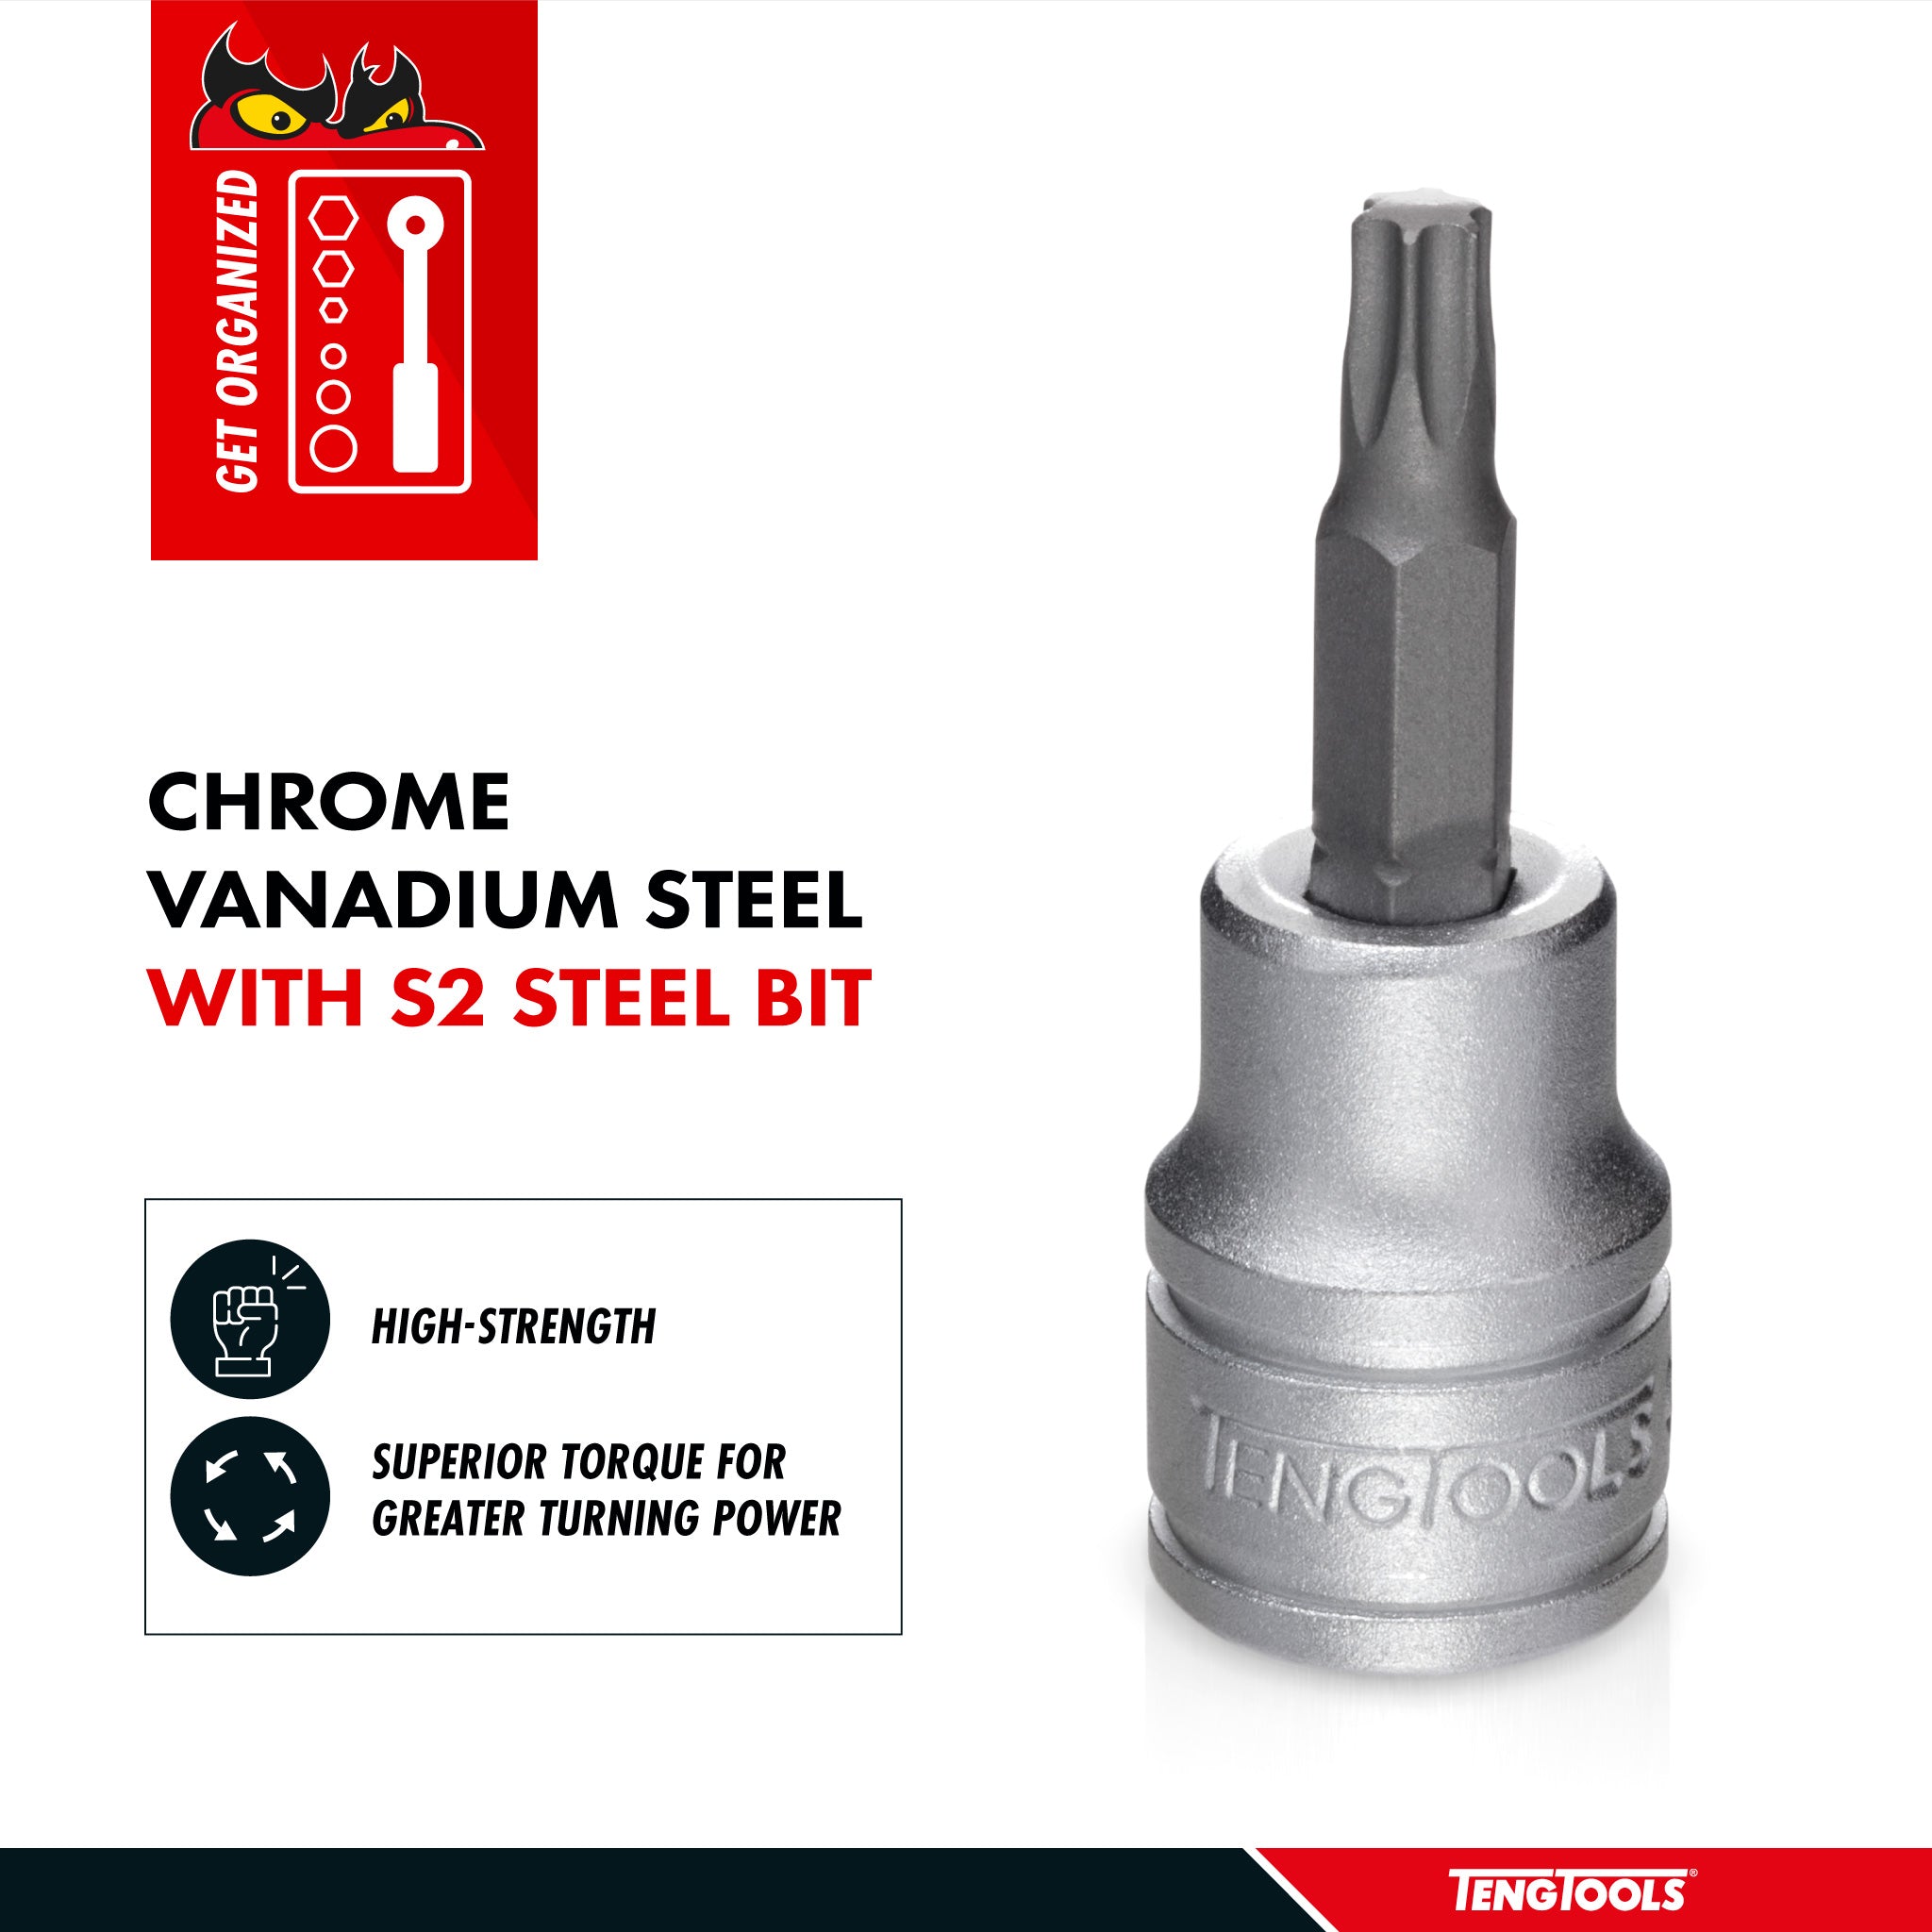 Teng Tools 1/2 Inch Drive Metric Torx TX Chrome Vanadium Sockets - TX27